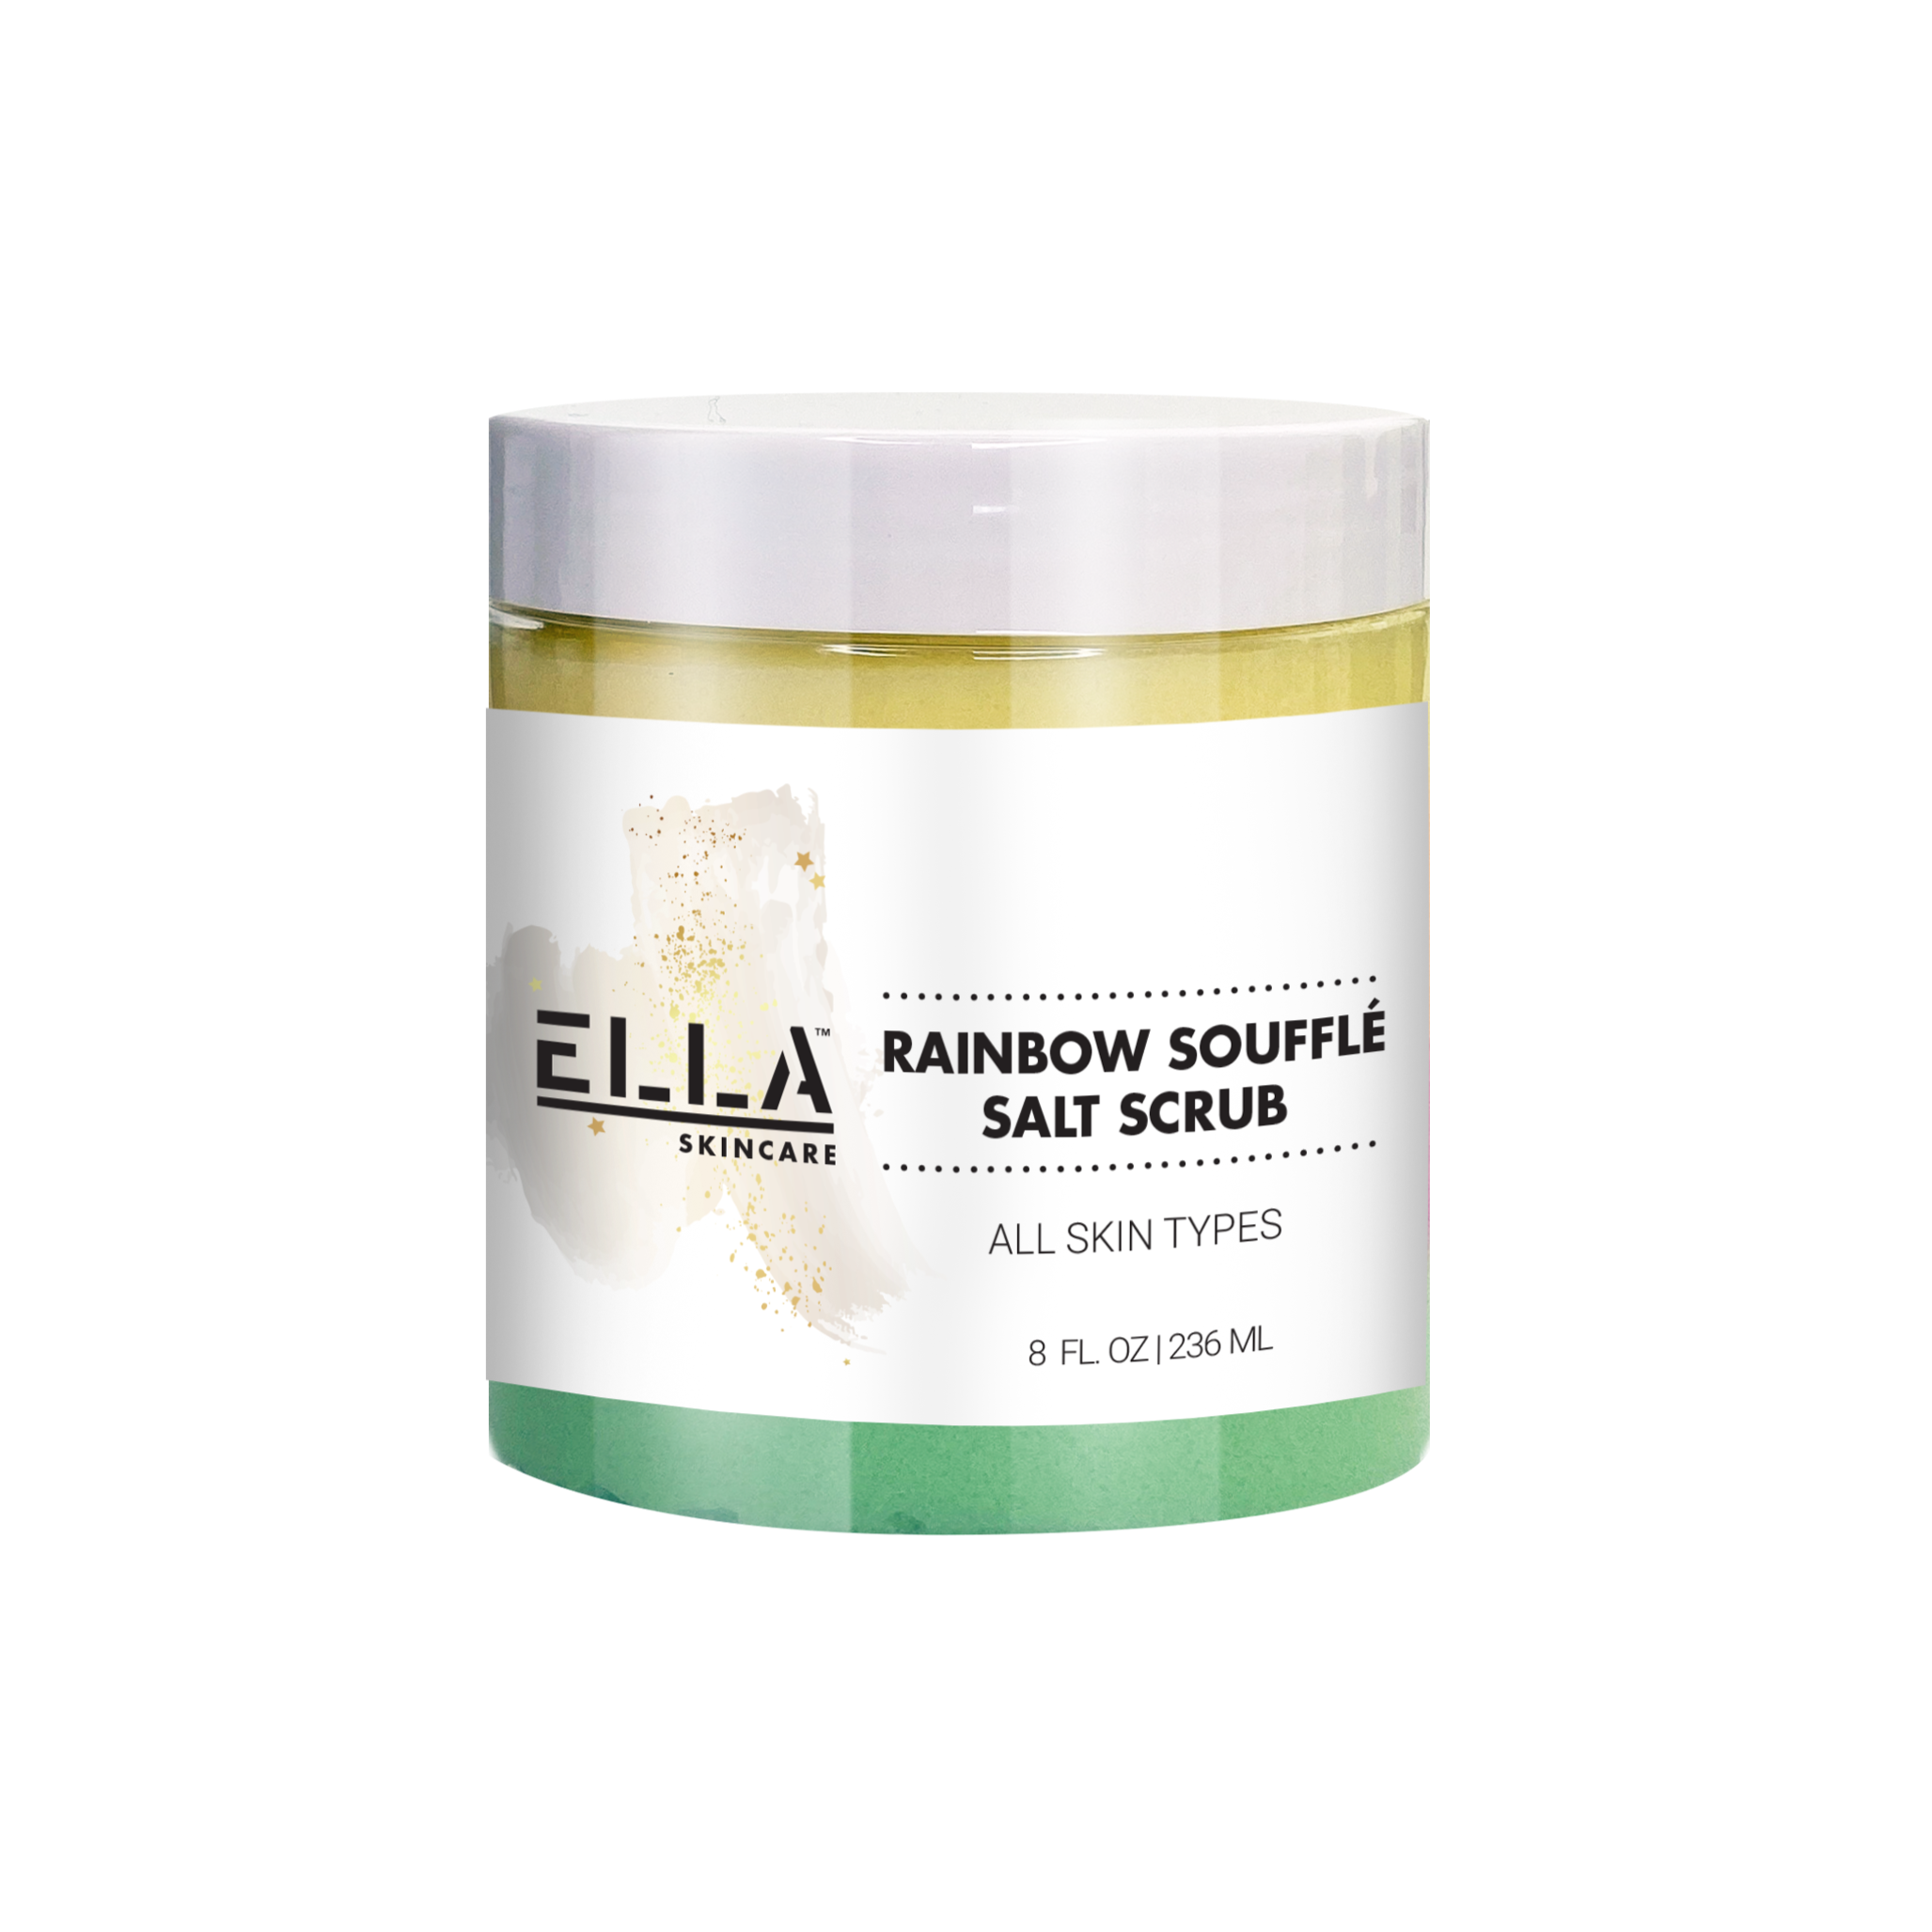 Rainbow Souffle Salt Scrub